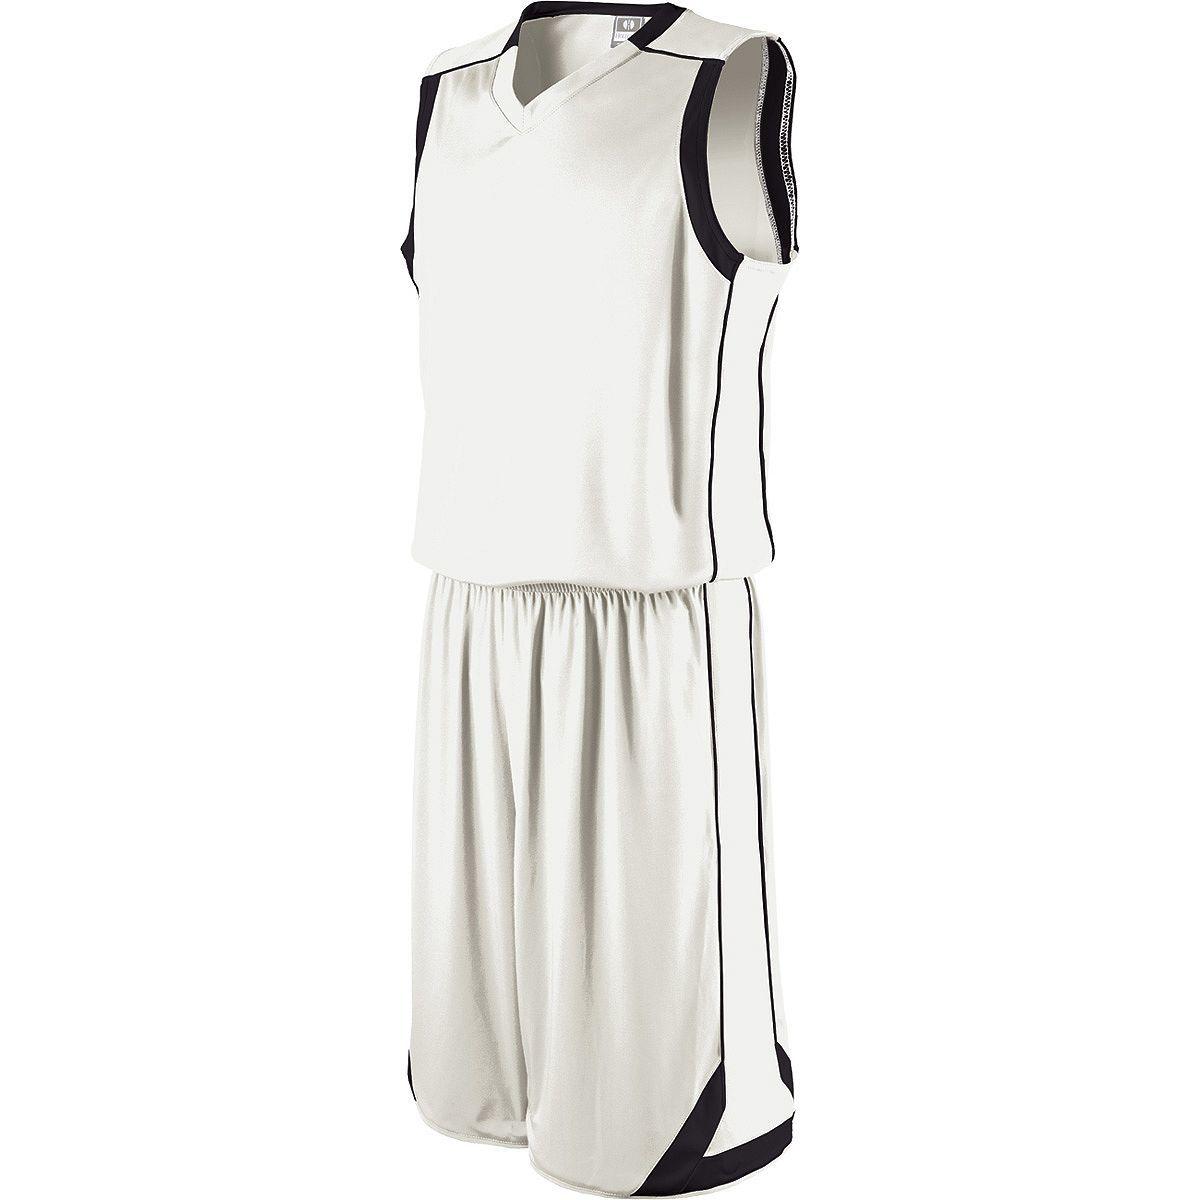 Carthage Basketball Shorts - Dresses Max